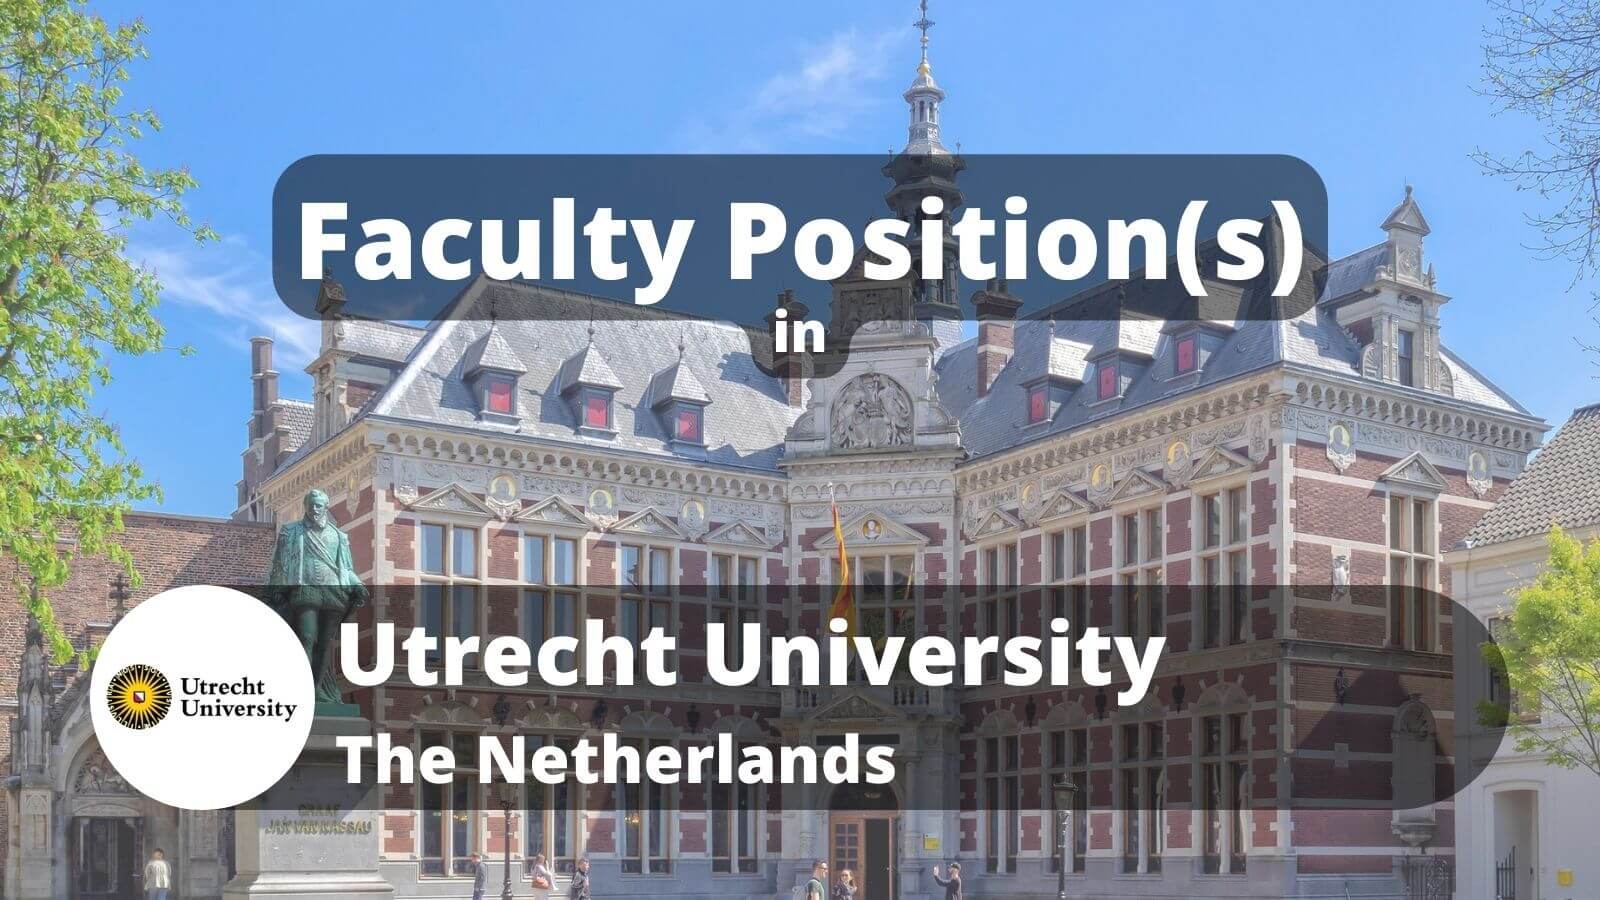 Faculty Positions in Utrecht University UU, The Netherlands